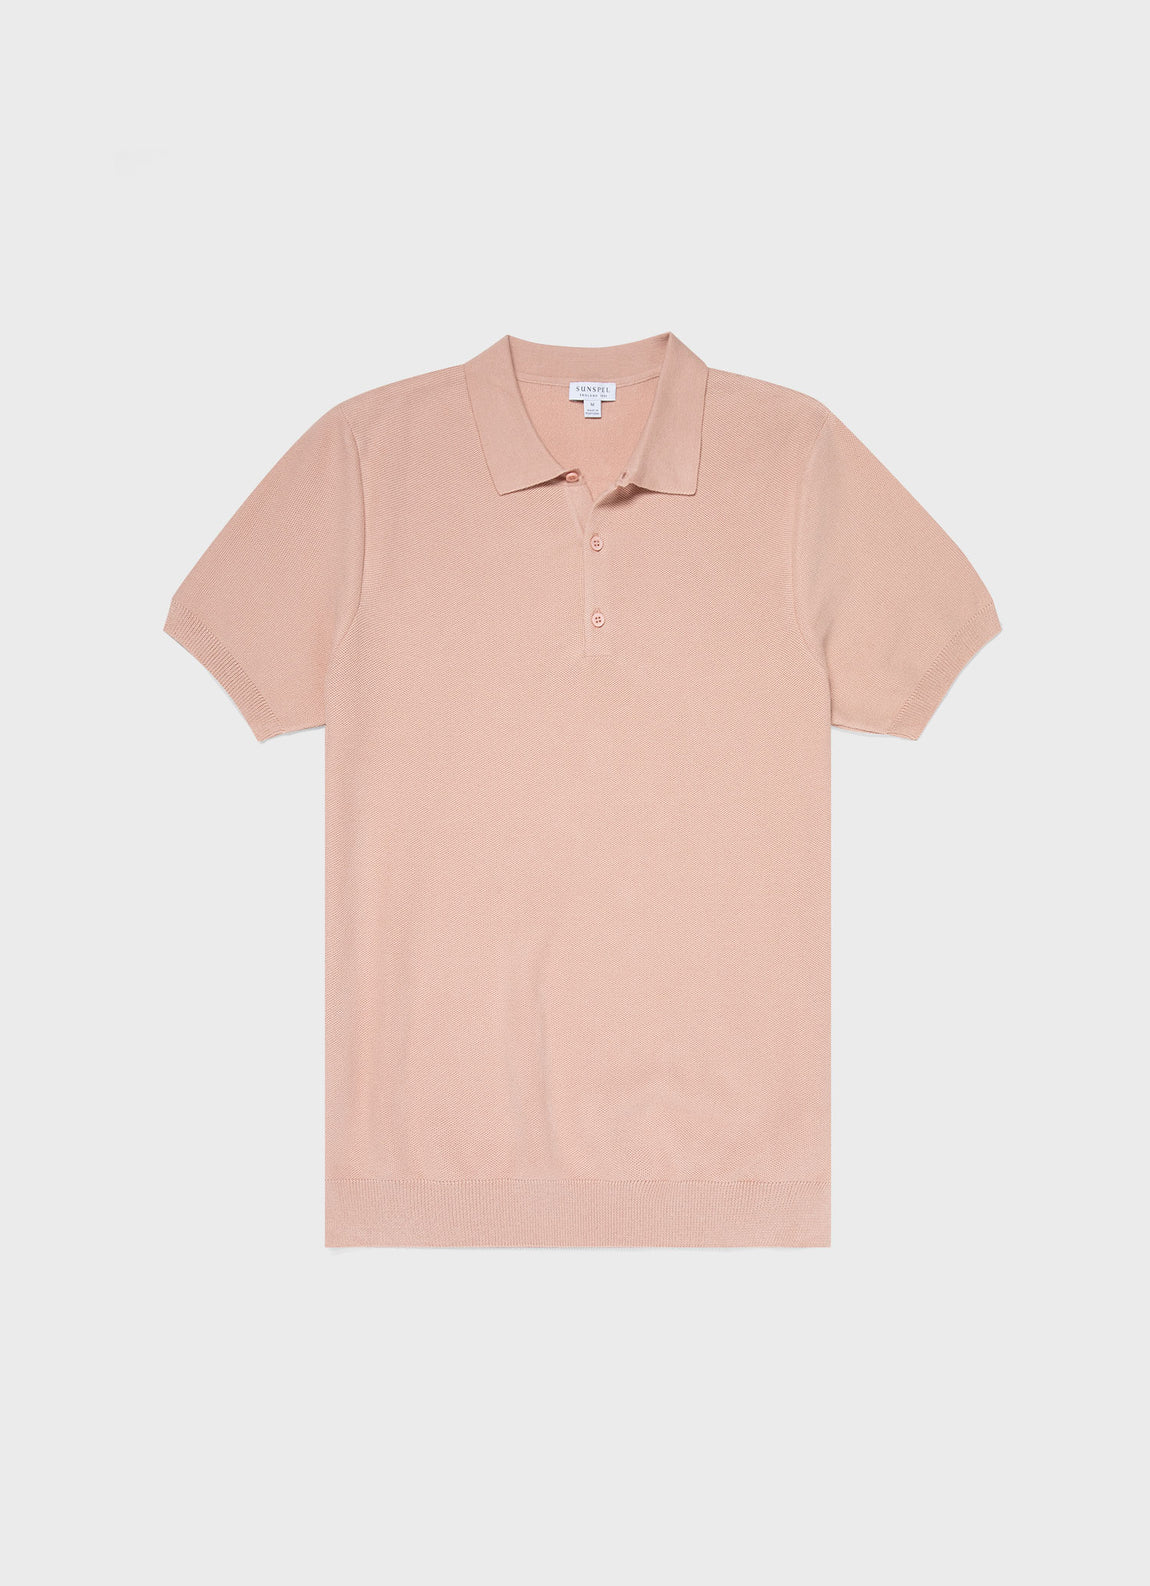 ustabil Analytisk Perth Men's Knit Polo Shirt in Shell Pink | Sunspel